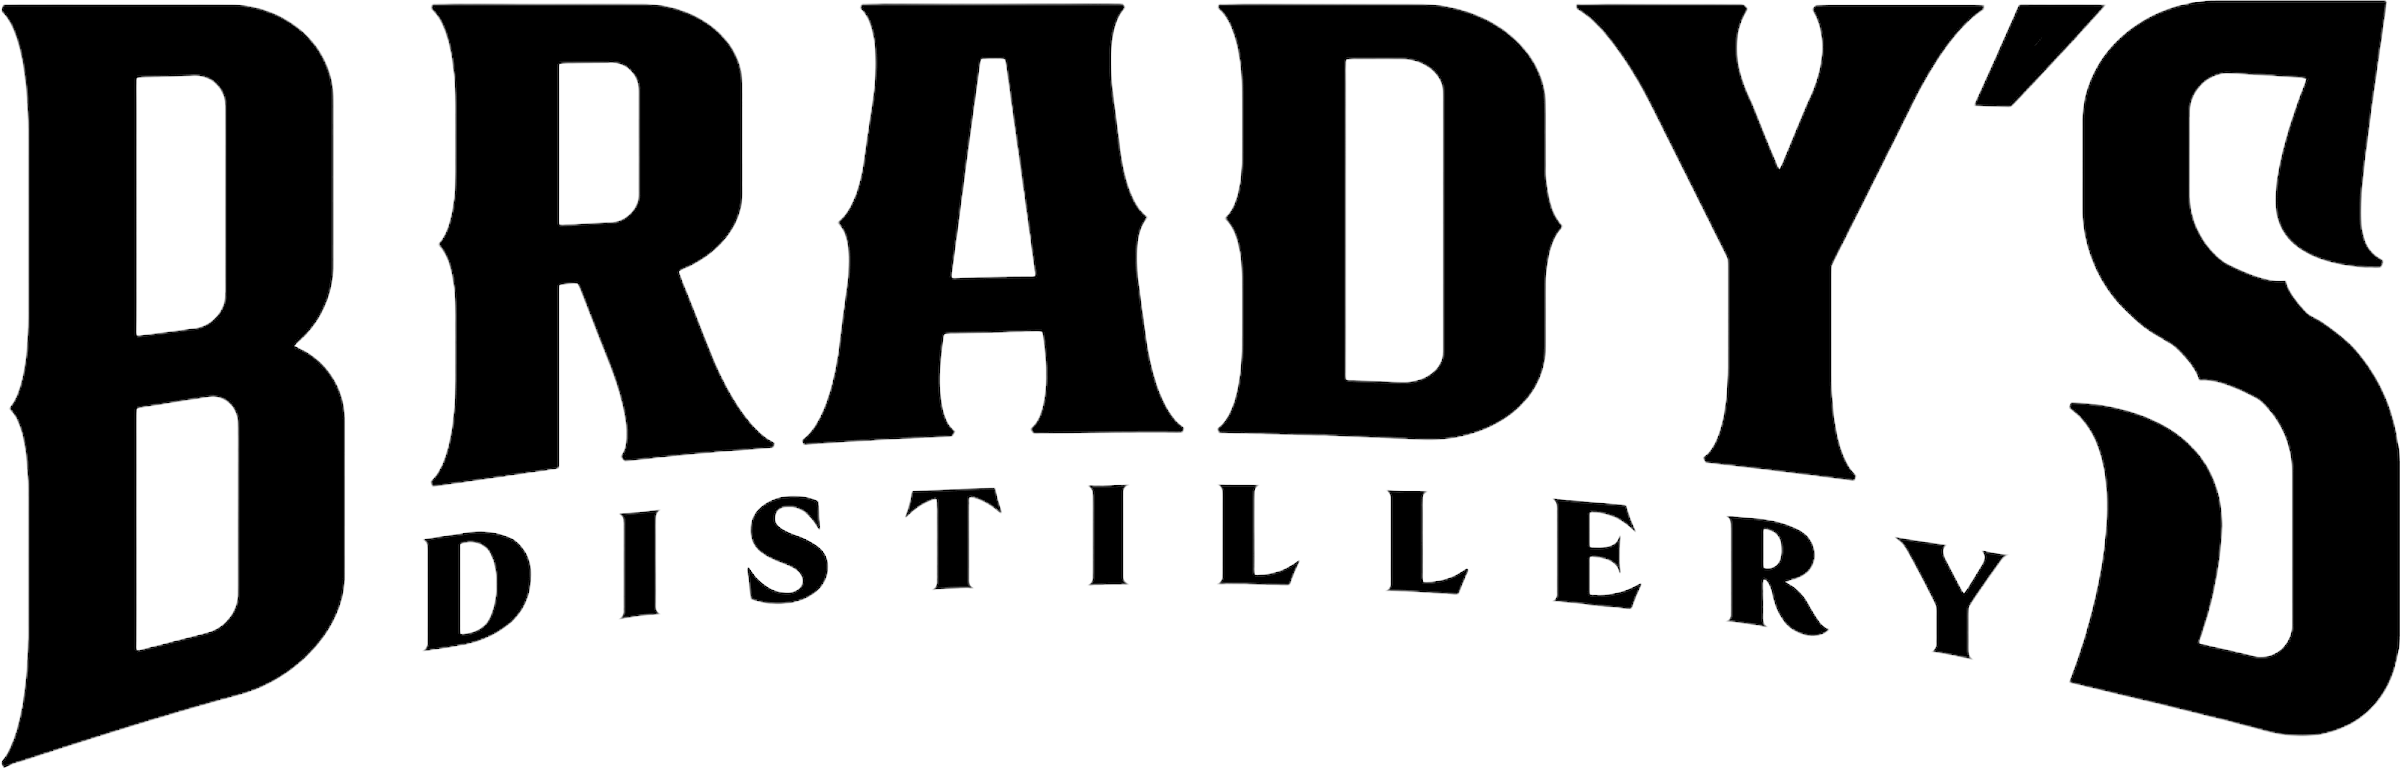 Brady's Distillery logo